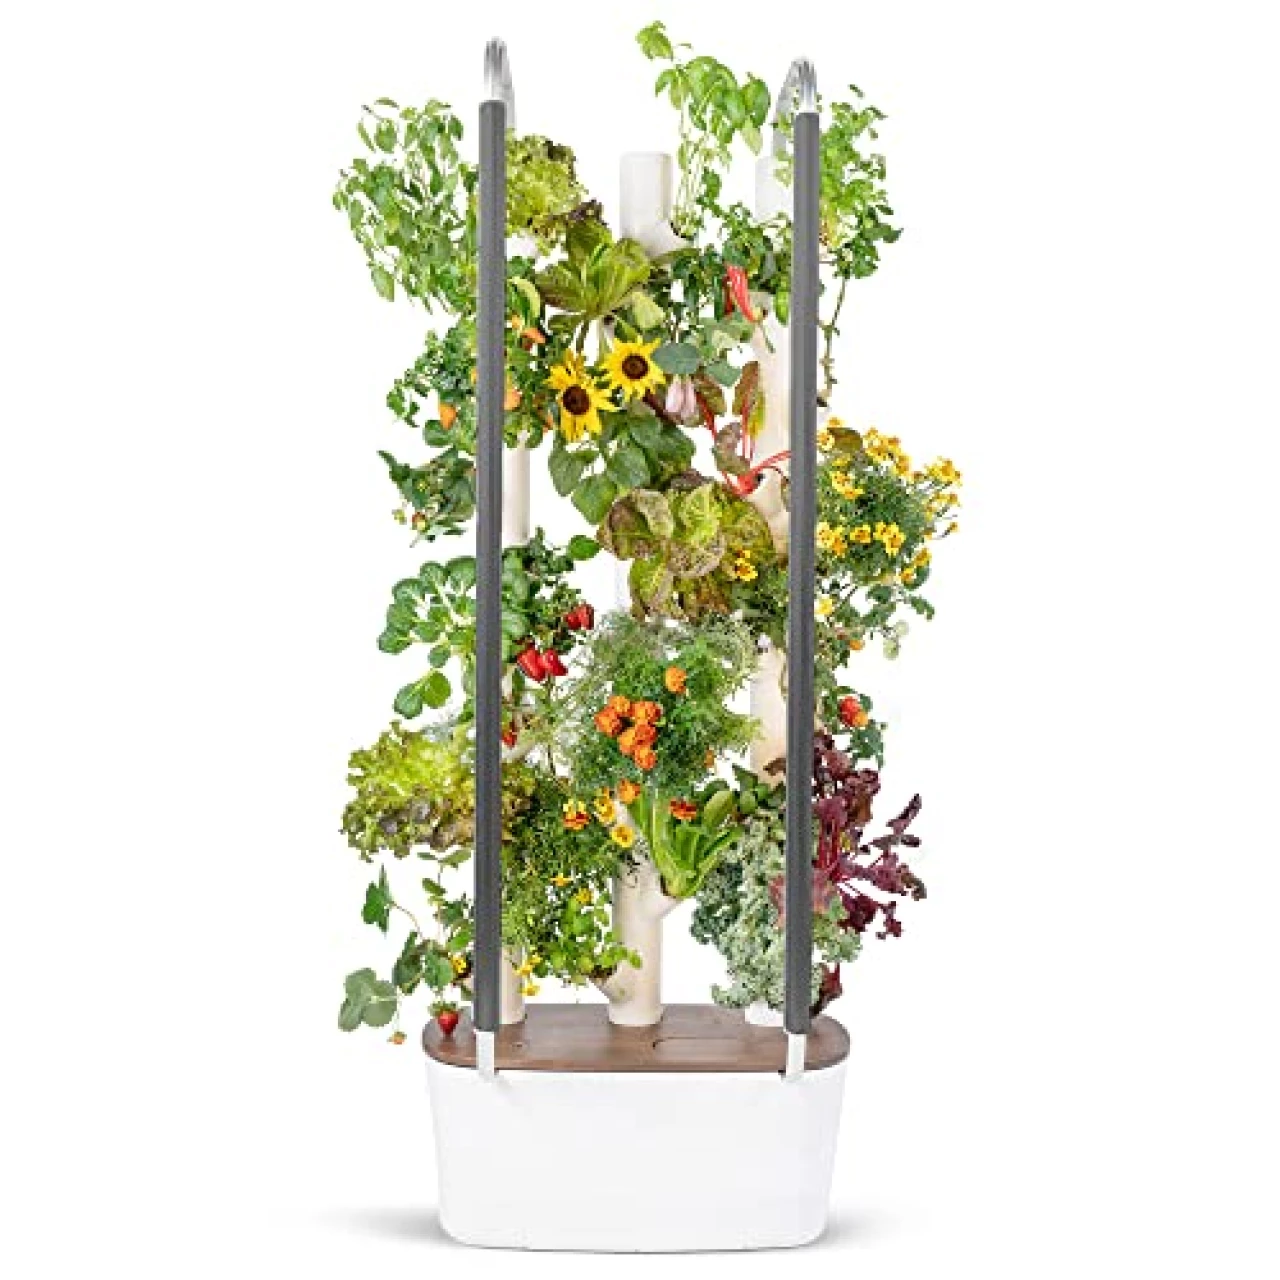 Gardyn 3.0 Hydroponics Growing System &amp; Vertical Garden Planter | Indoor Smart Garden| Includes 30 Non-GMO Indoor Plants, Herbs &amp; Vegetables &amp; LED Grow Lights for Your Home Indoor Gardening System